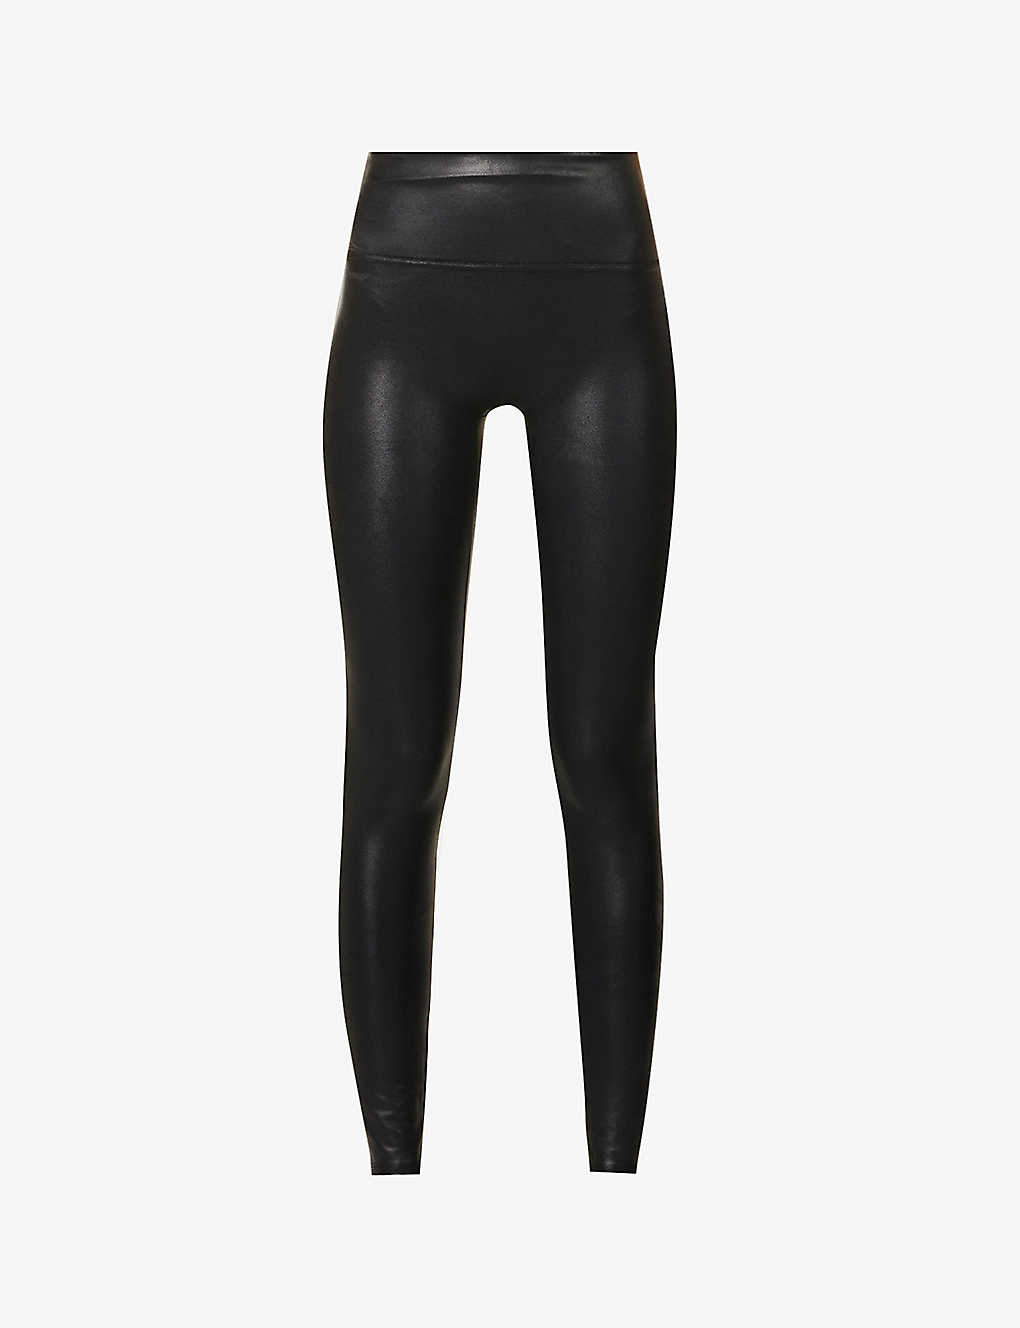 SPANX - High-rise faux-leather leggings | Selfridges.com